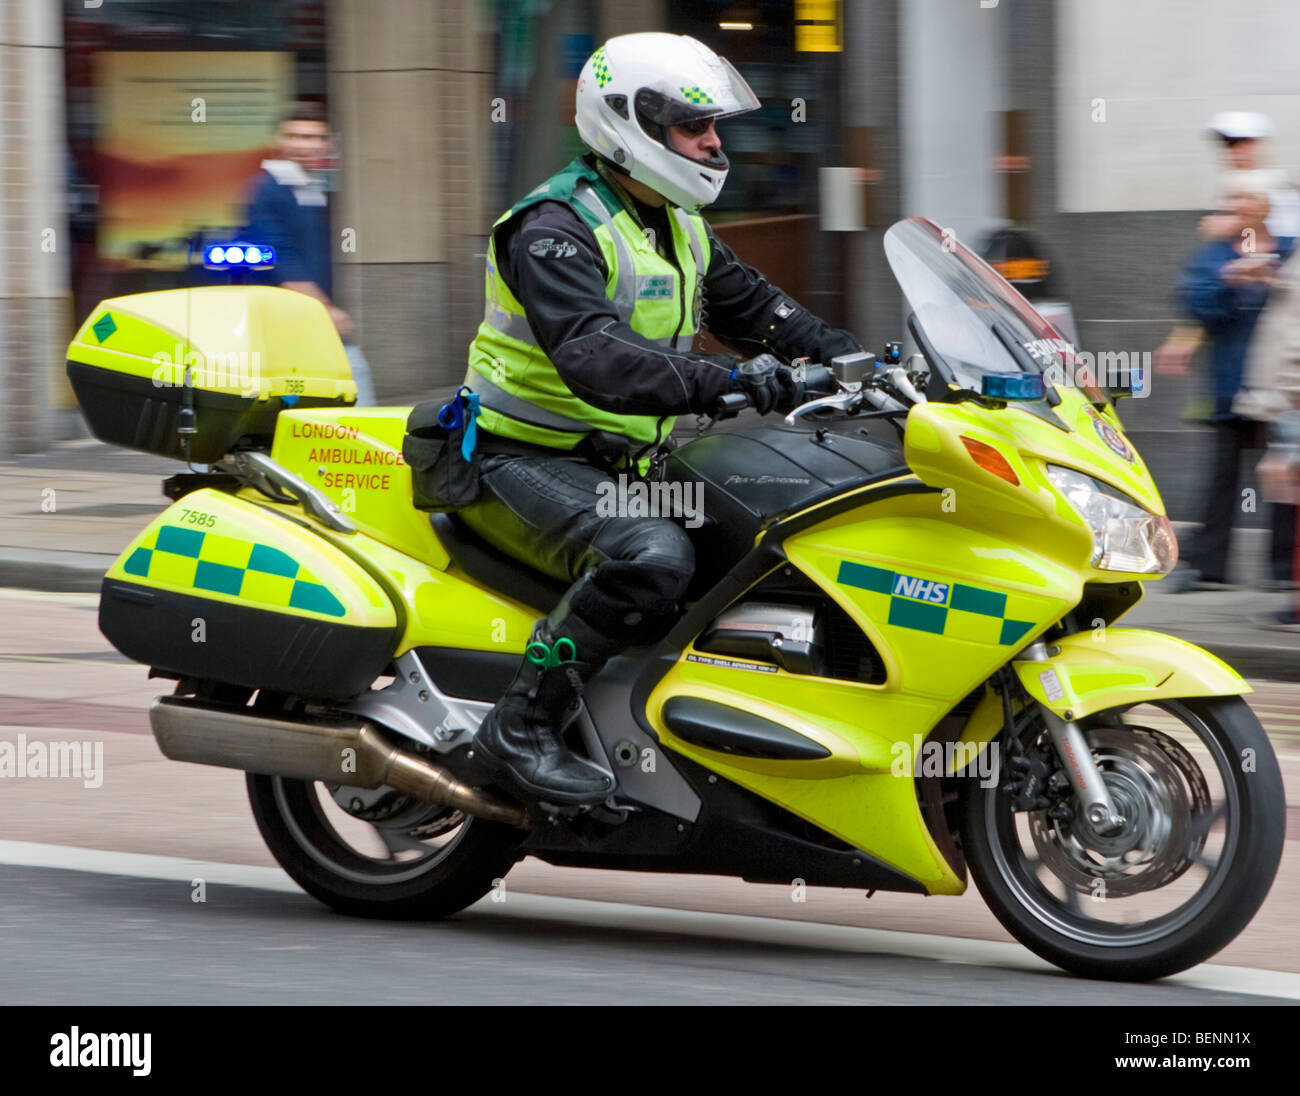 Motorcycle paramedic ambulance medic hi-res stock photography and images -  Alamy